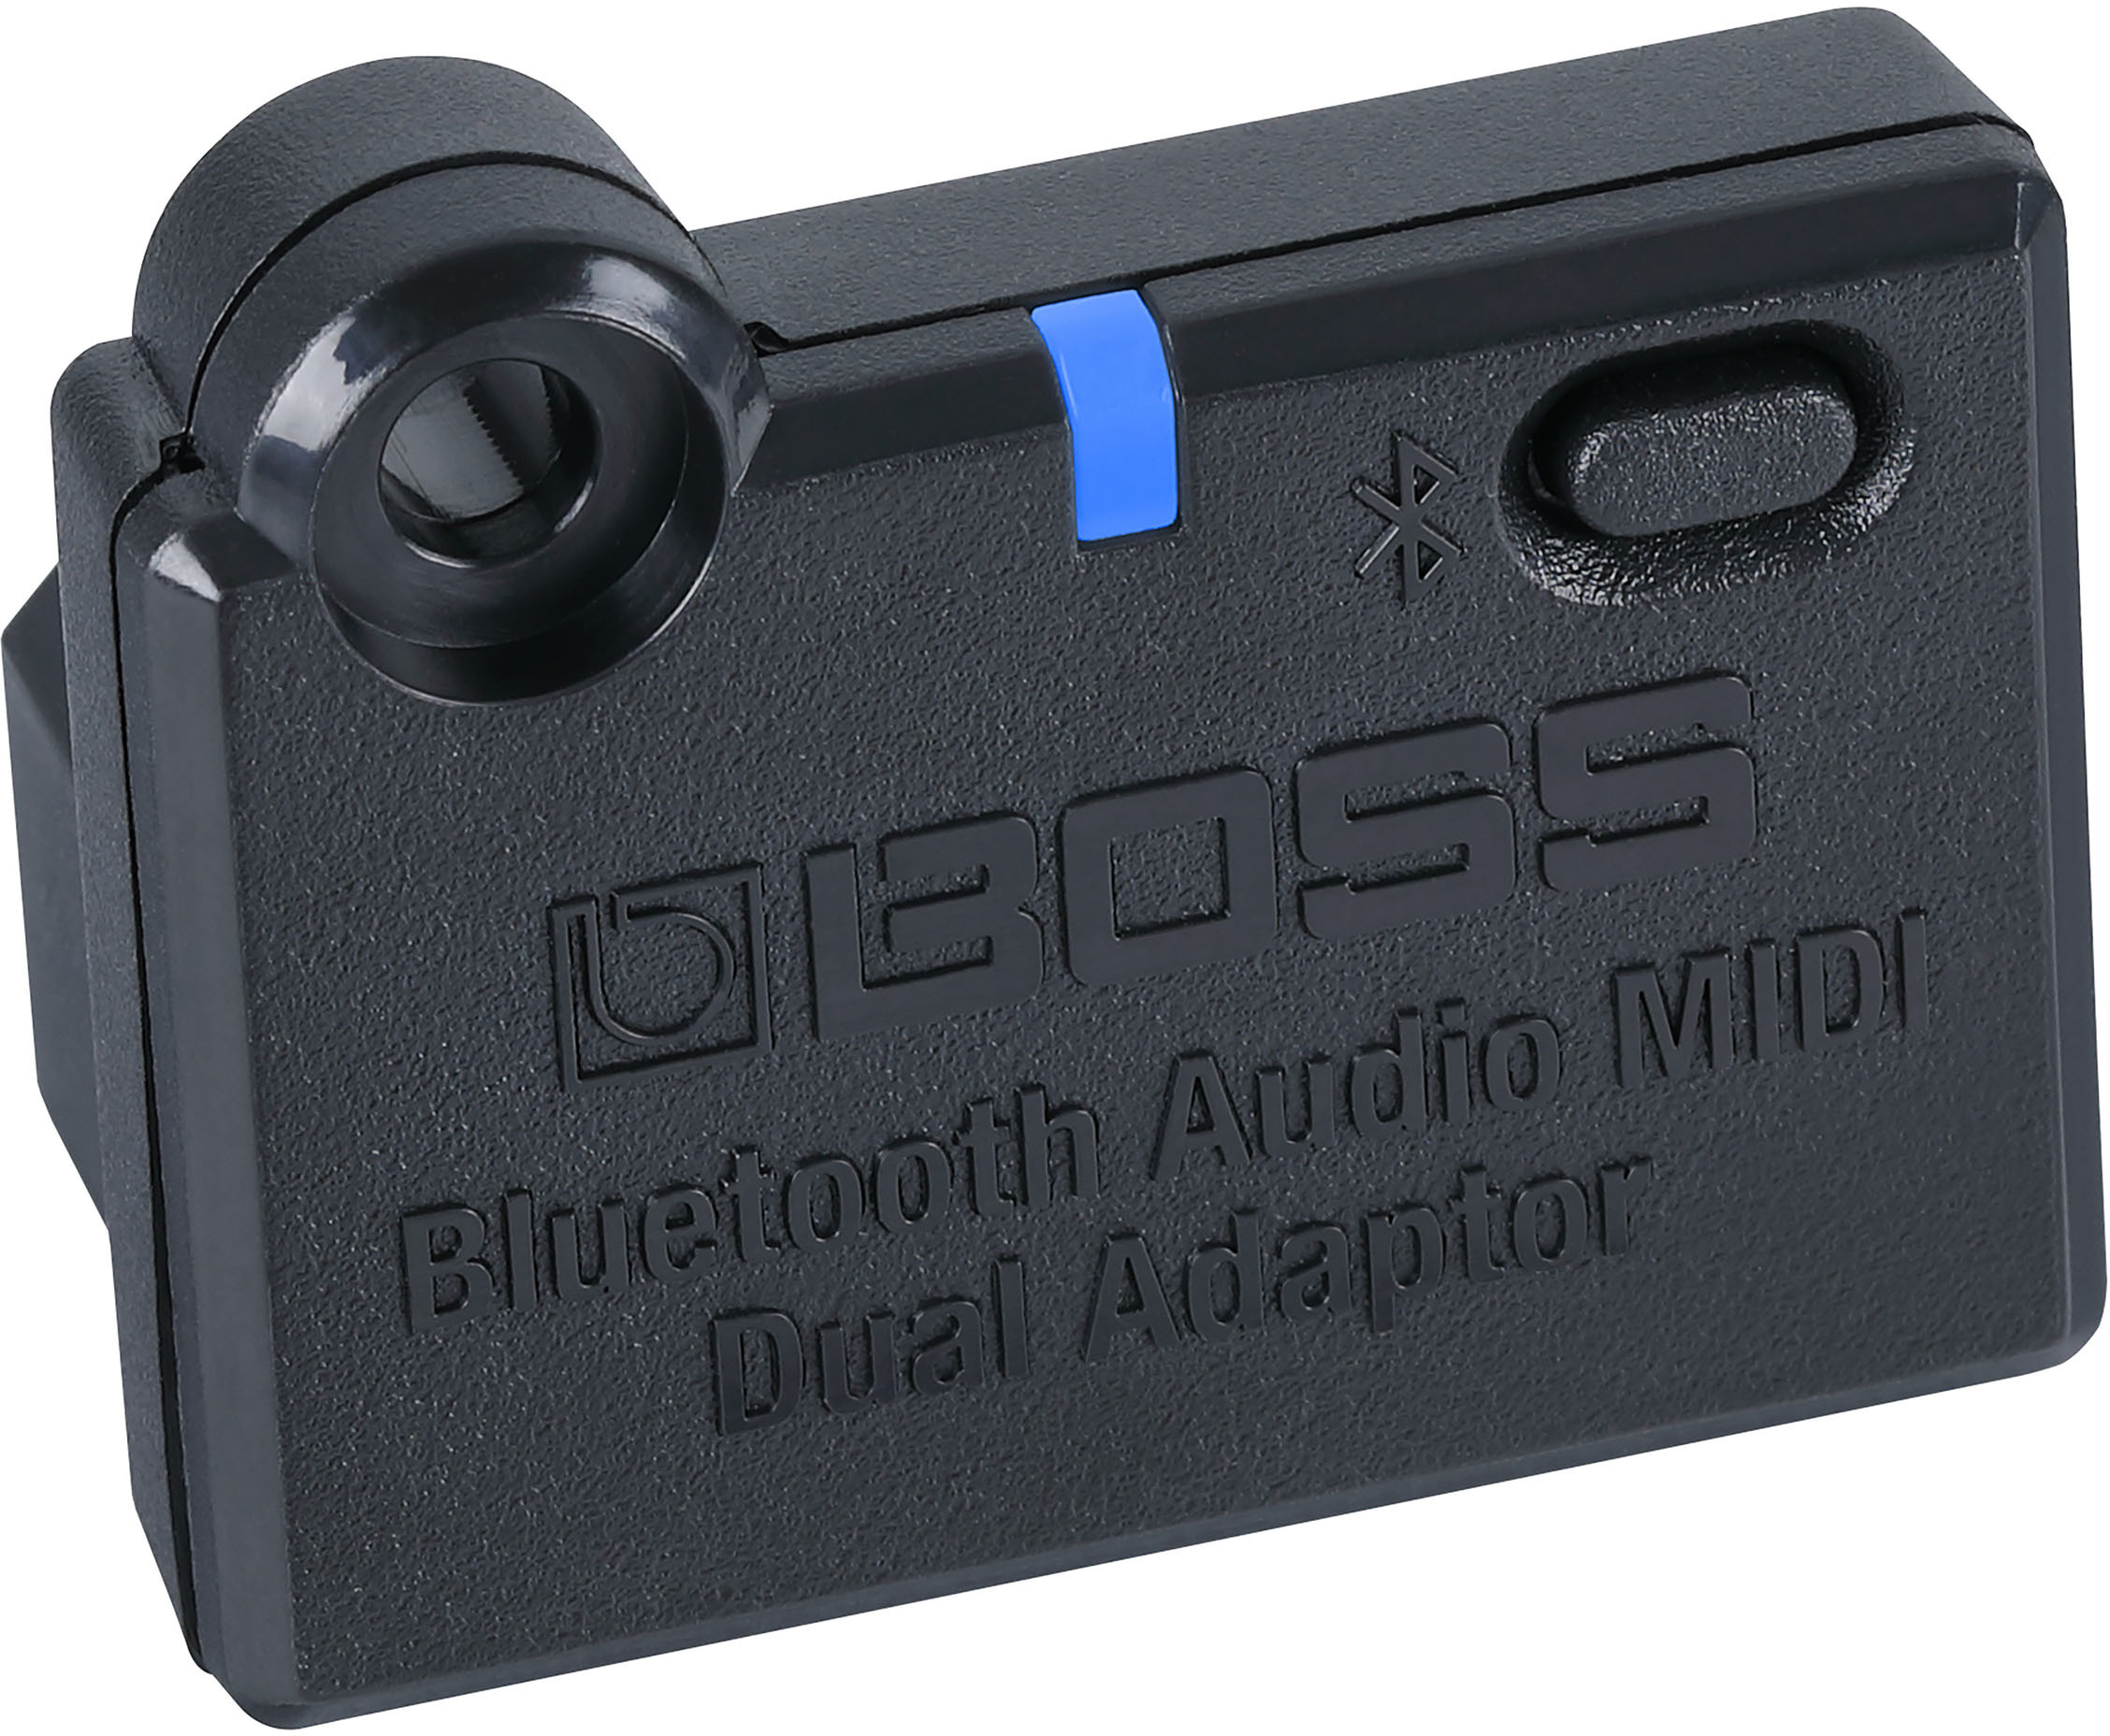 Boss Bluetooth Audio Adaptator - Mas accesorios para efectos - Main picture